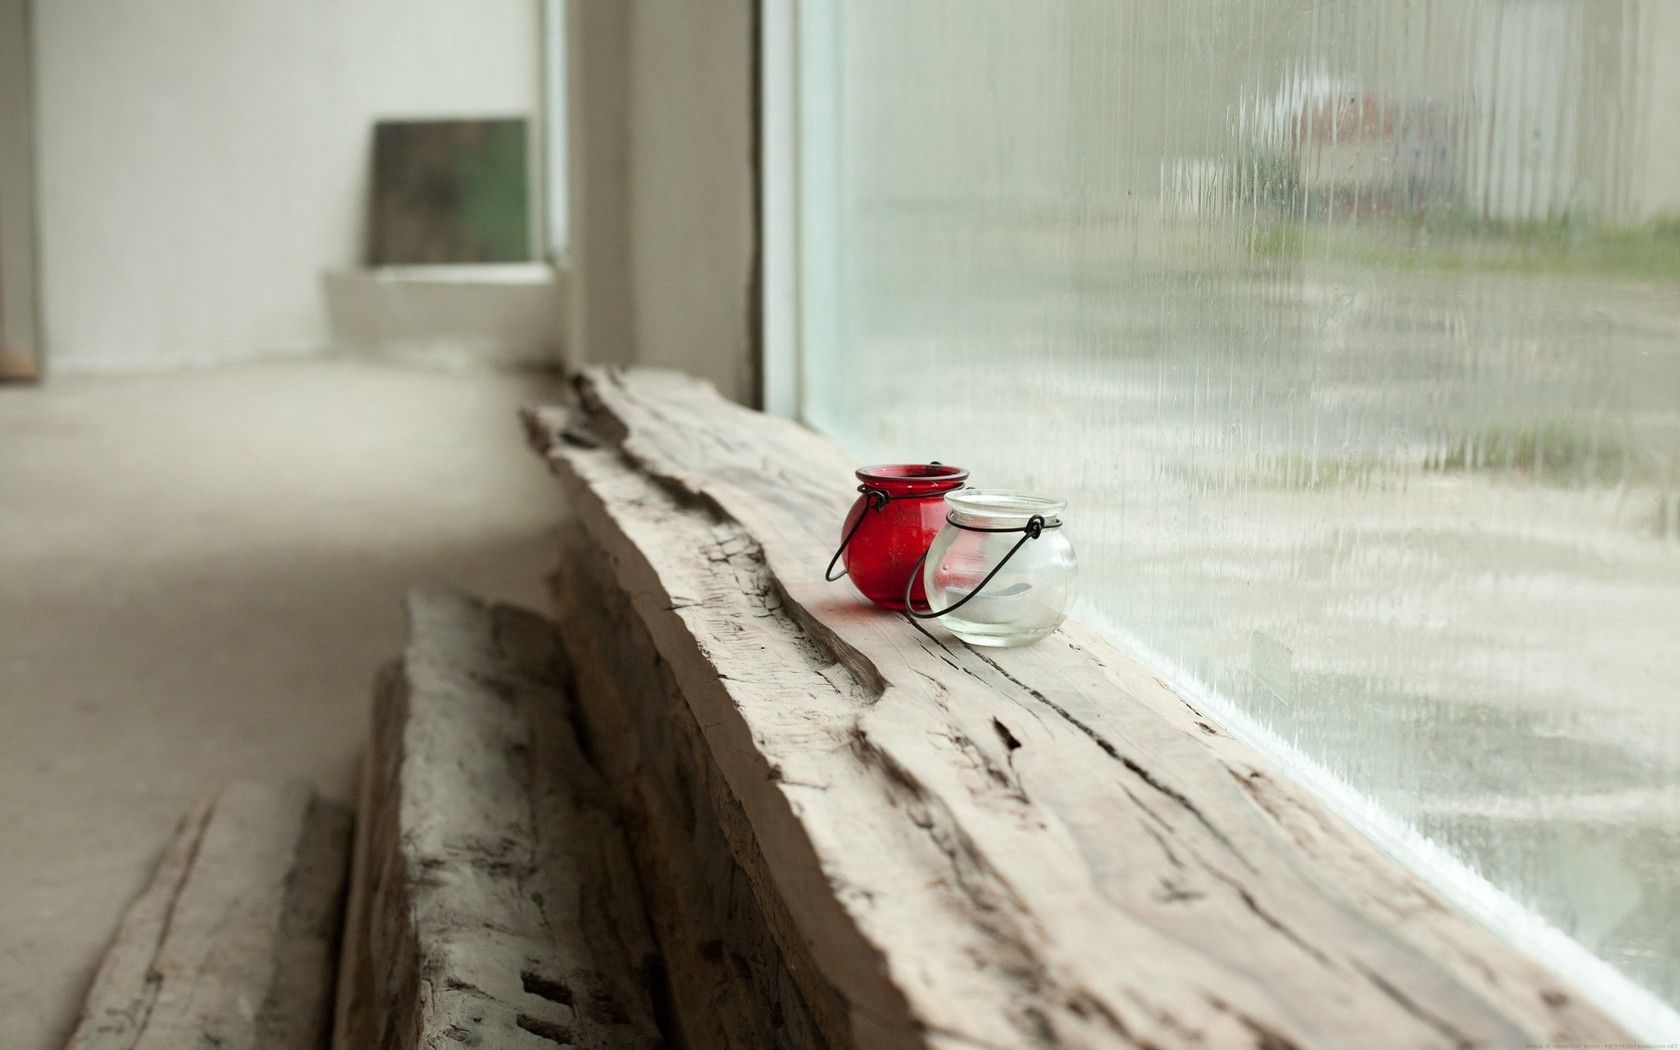 miscellanea, rain, miscellaneous, glass, window, vases wallpaper for mobile